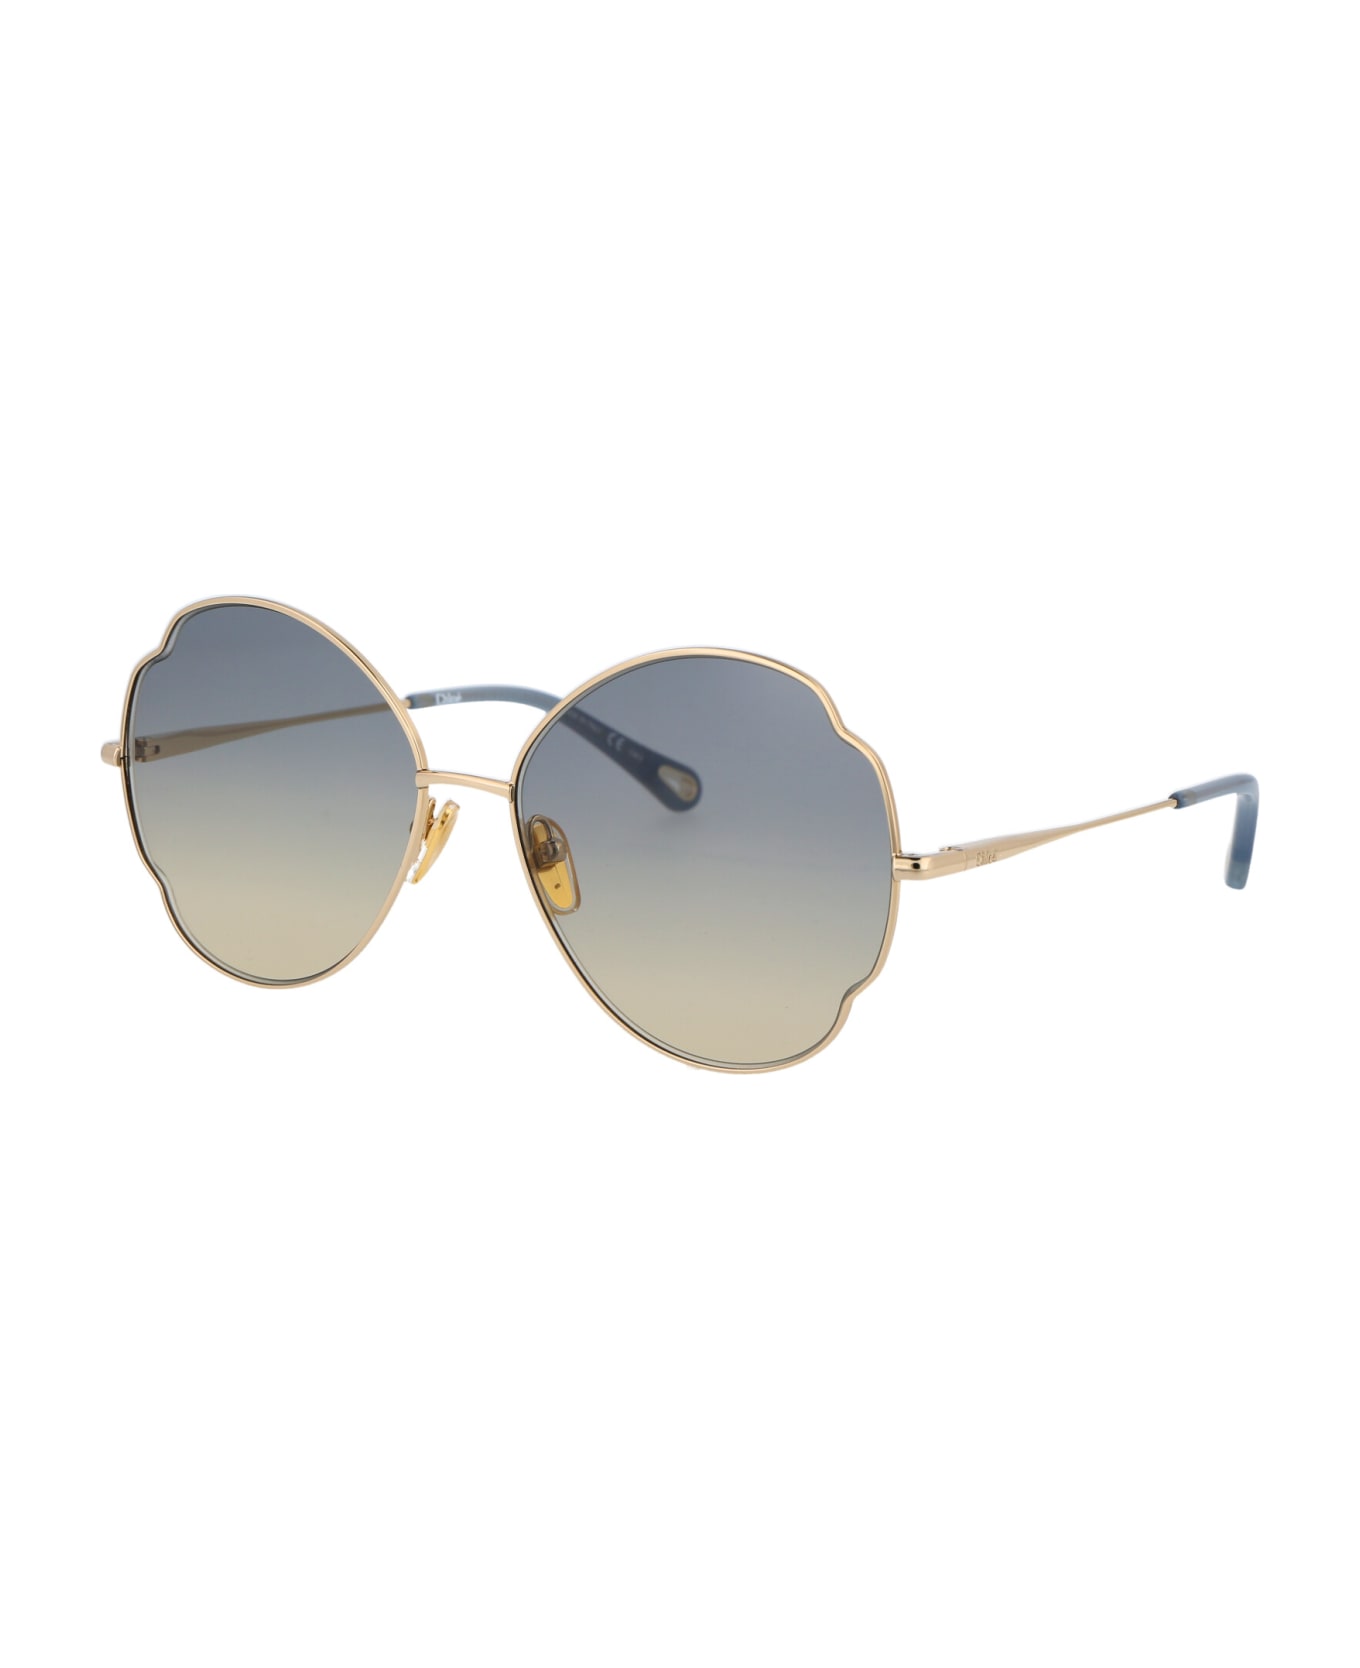 Chloé Eyewear Ch0093s Sunglasses - 002 GOLD GOLD GREY